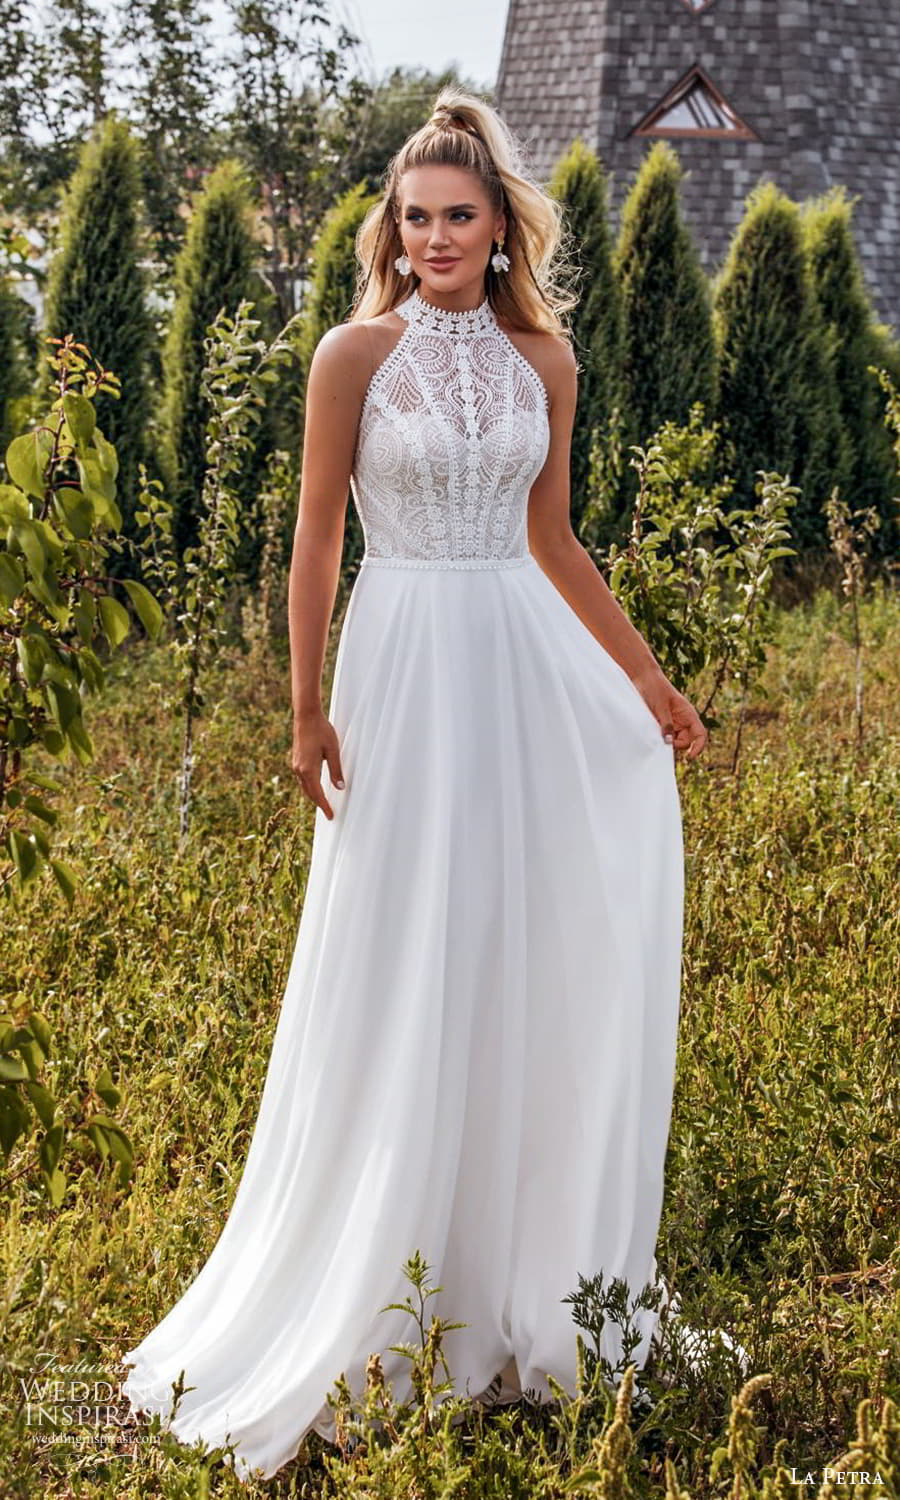 la petra 2021 bridal sleevelss halter neckline embellished bodice clean skirt a line wedding dress chapel train (12) mv